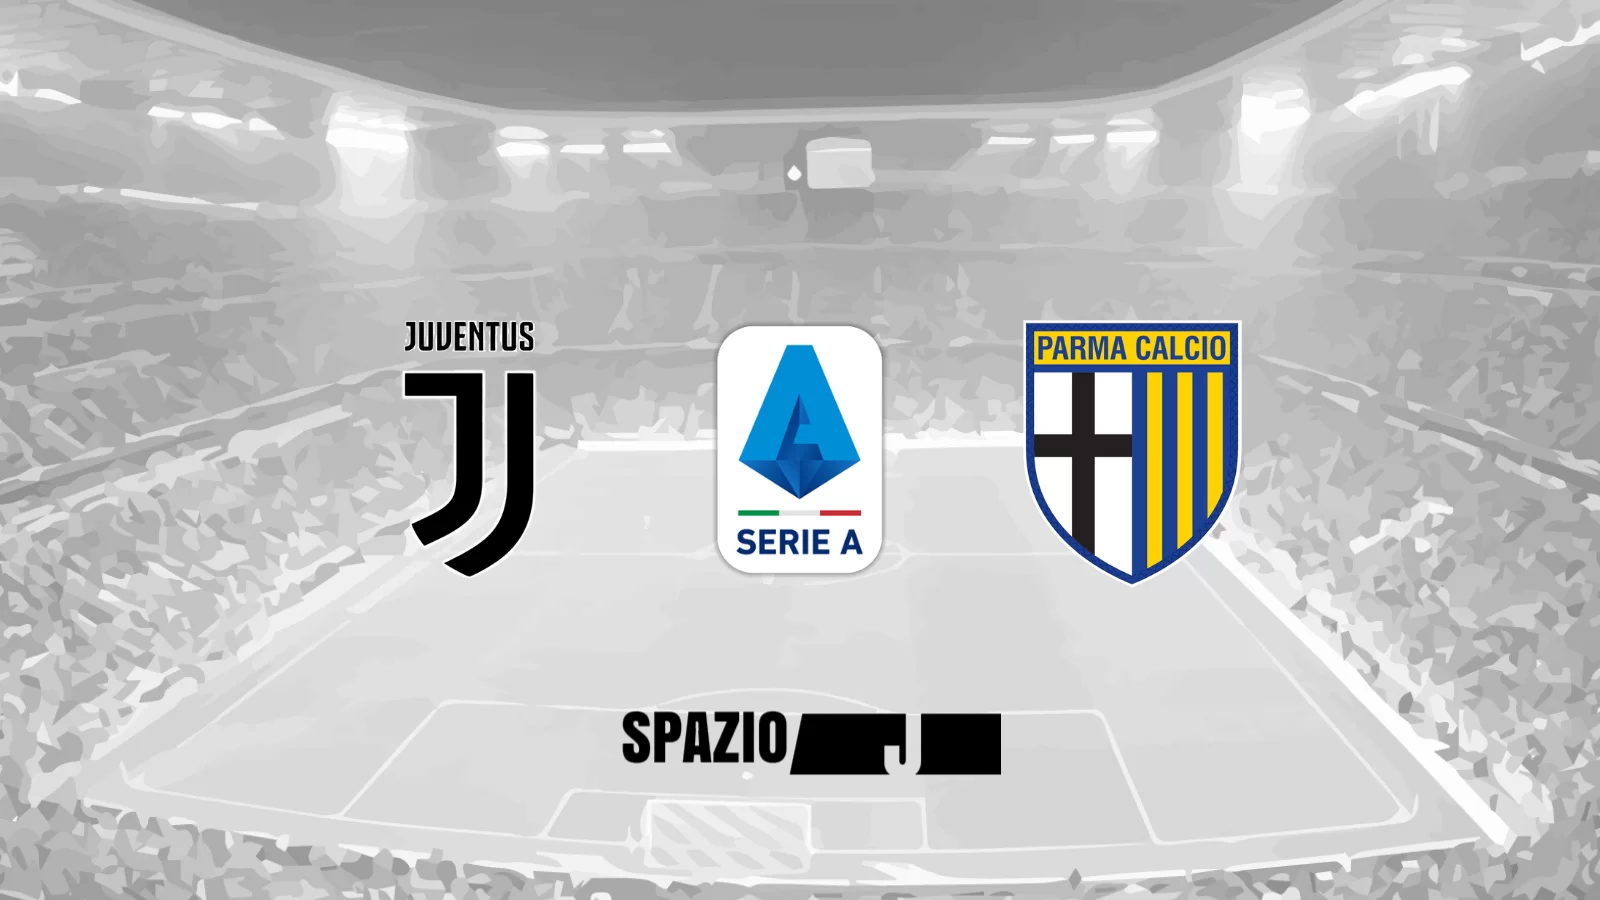 Parma – Il focus sulla Juventus sul sito del club